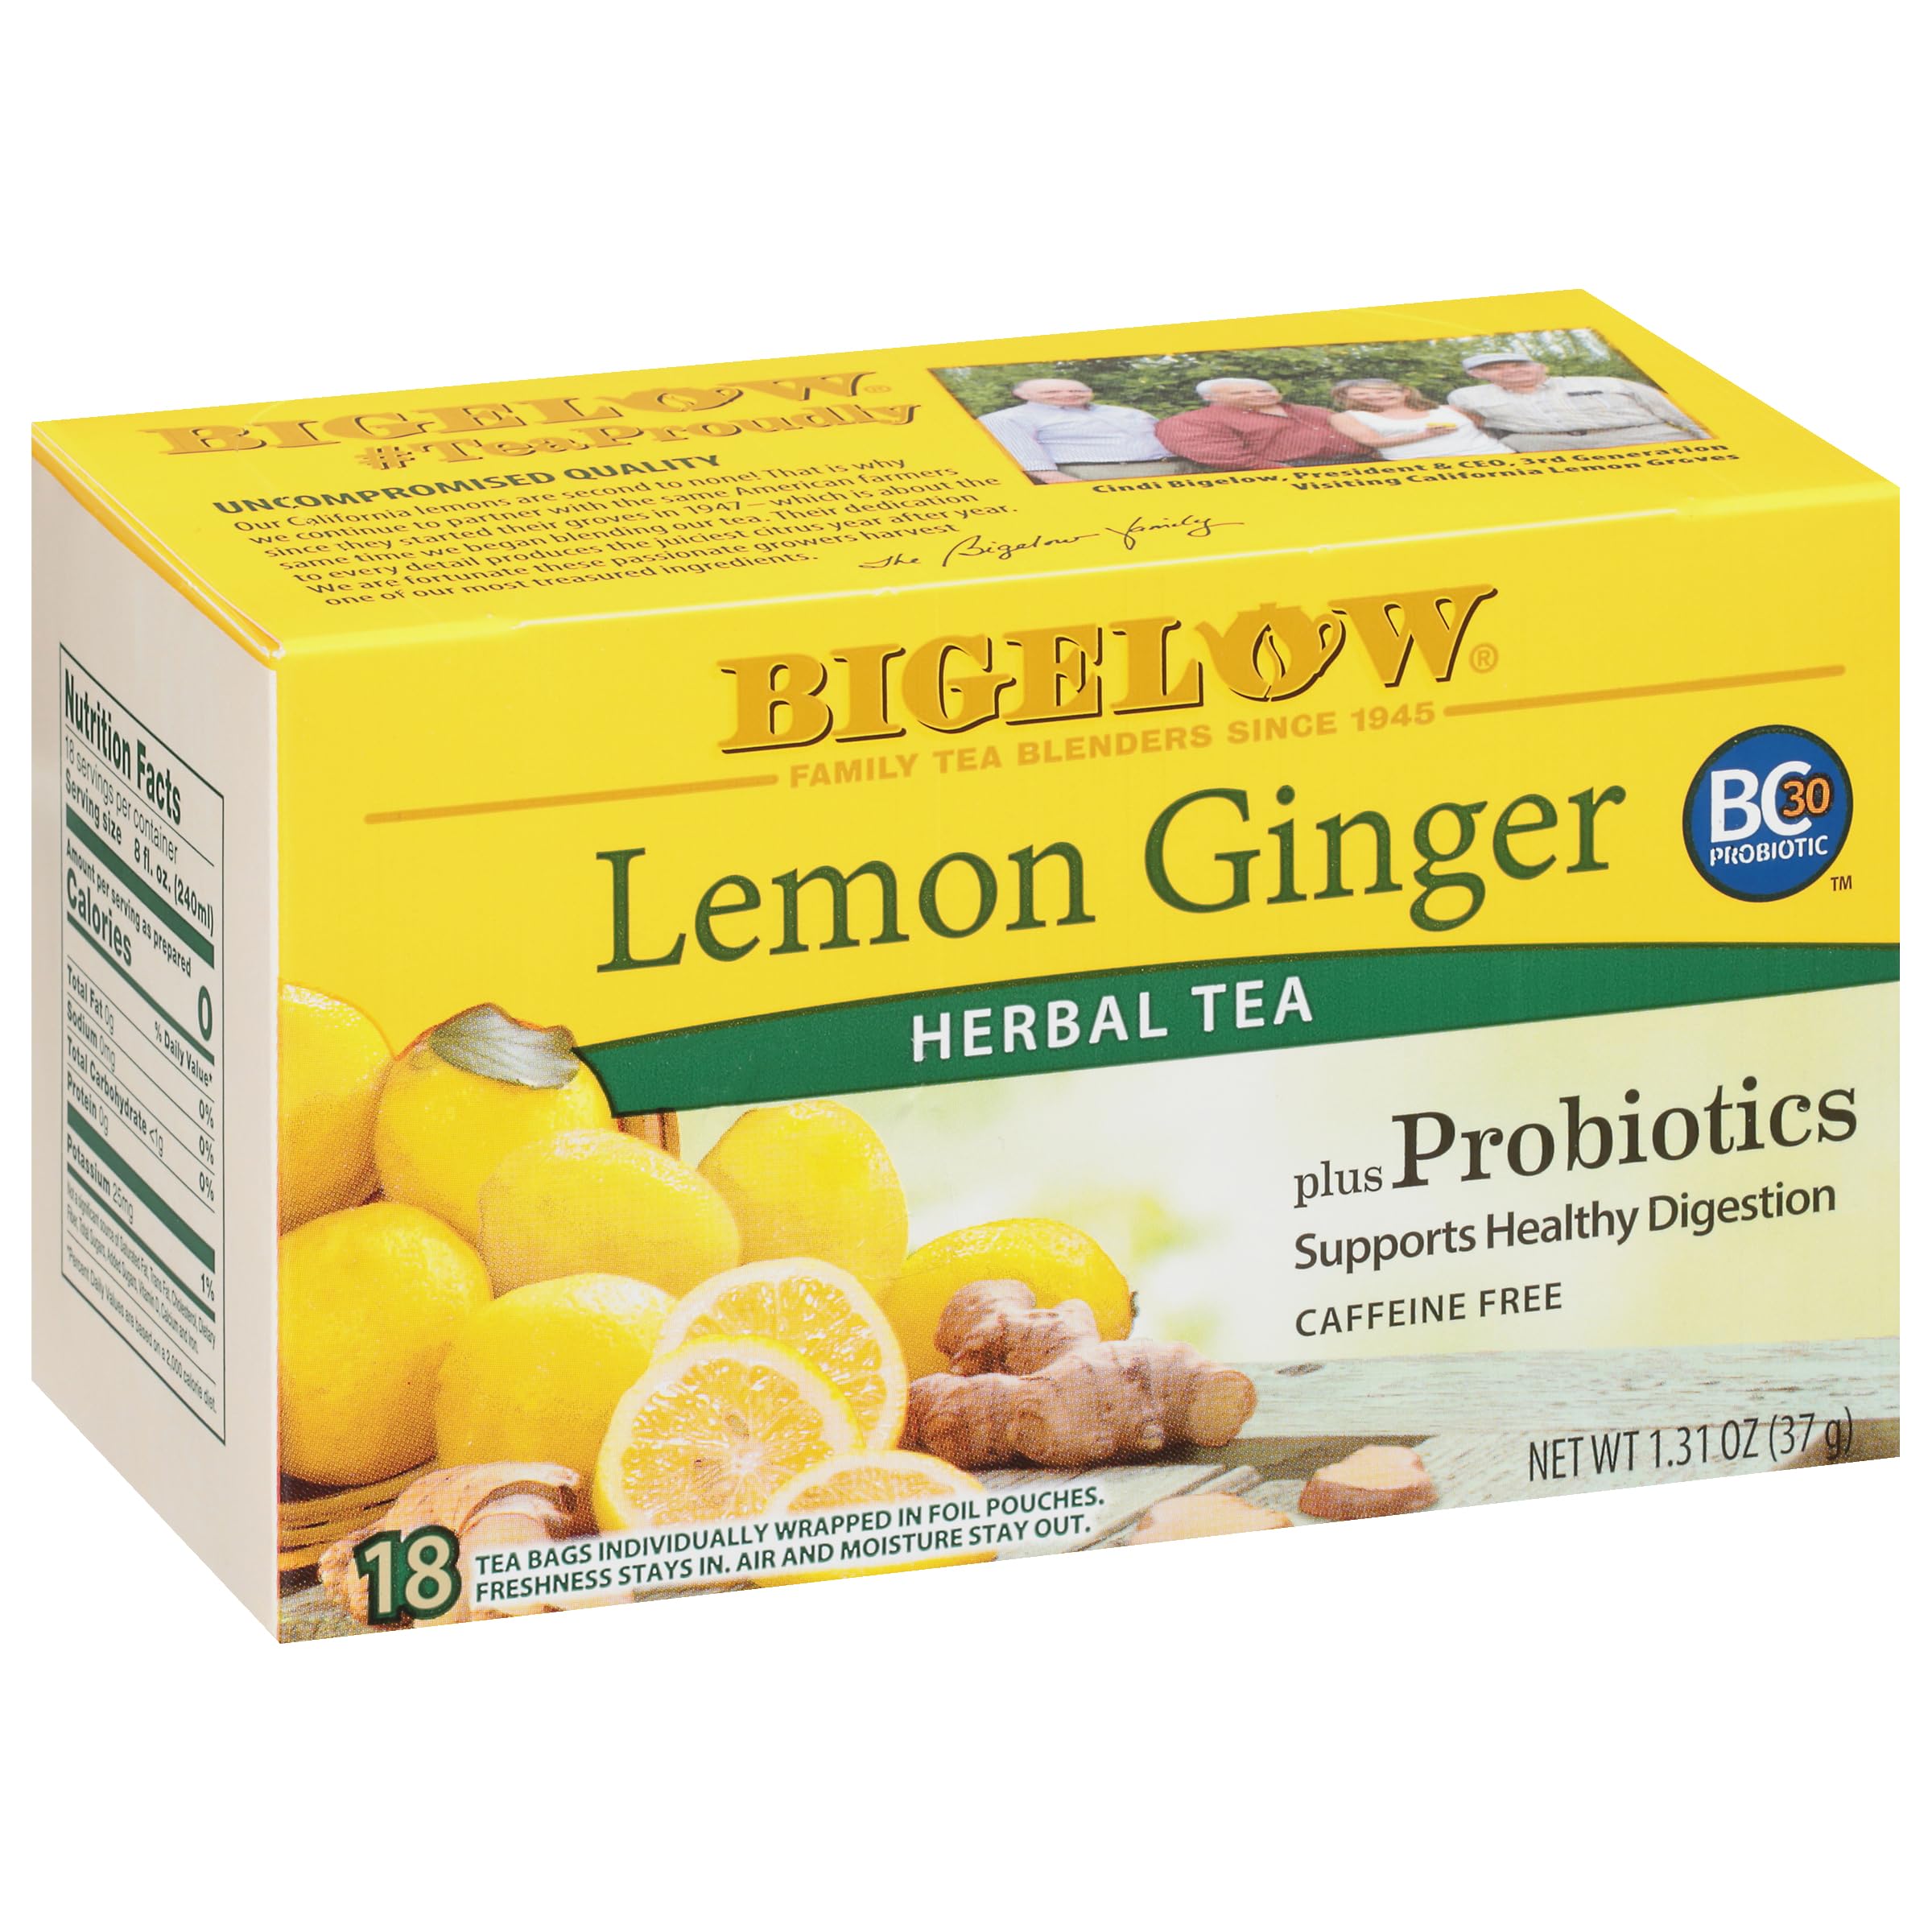 Bigelow Tea Lemon Ginger plus Probiotics Herbal Tea, Caffeine Free, 18 Count (Pack of 6), 108 Total Tea Bags